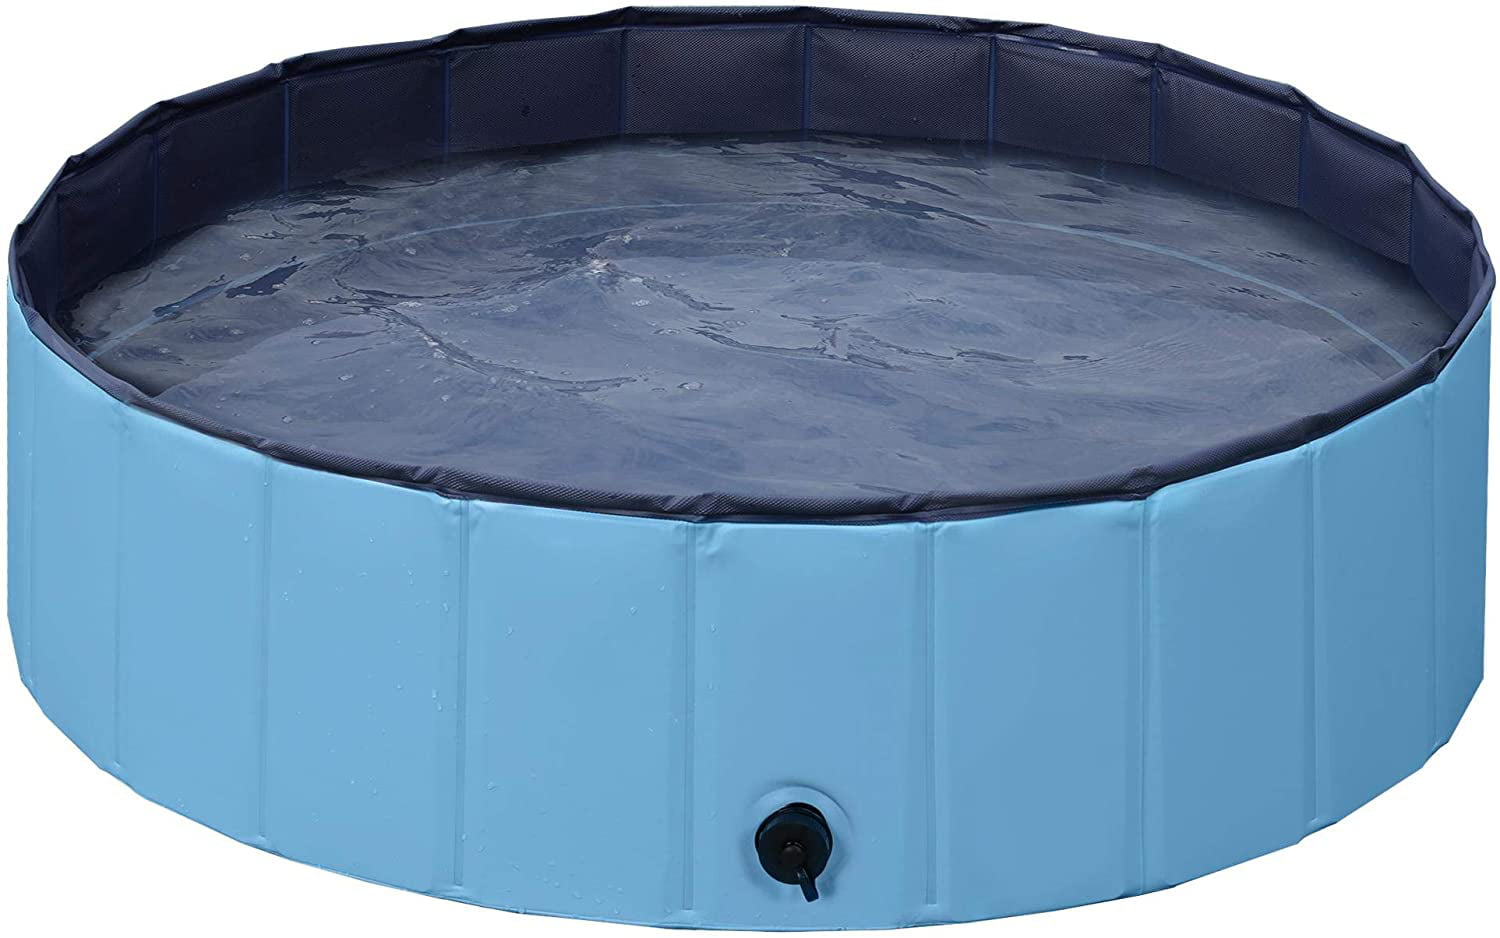 DecorX Hard Plastic Foldable Bath Pool Collapsible Large